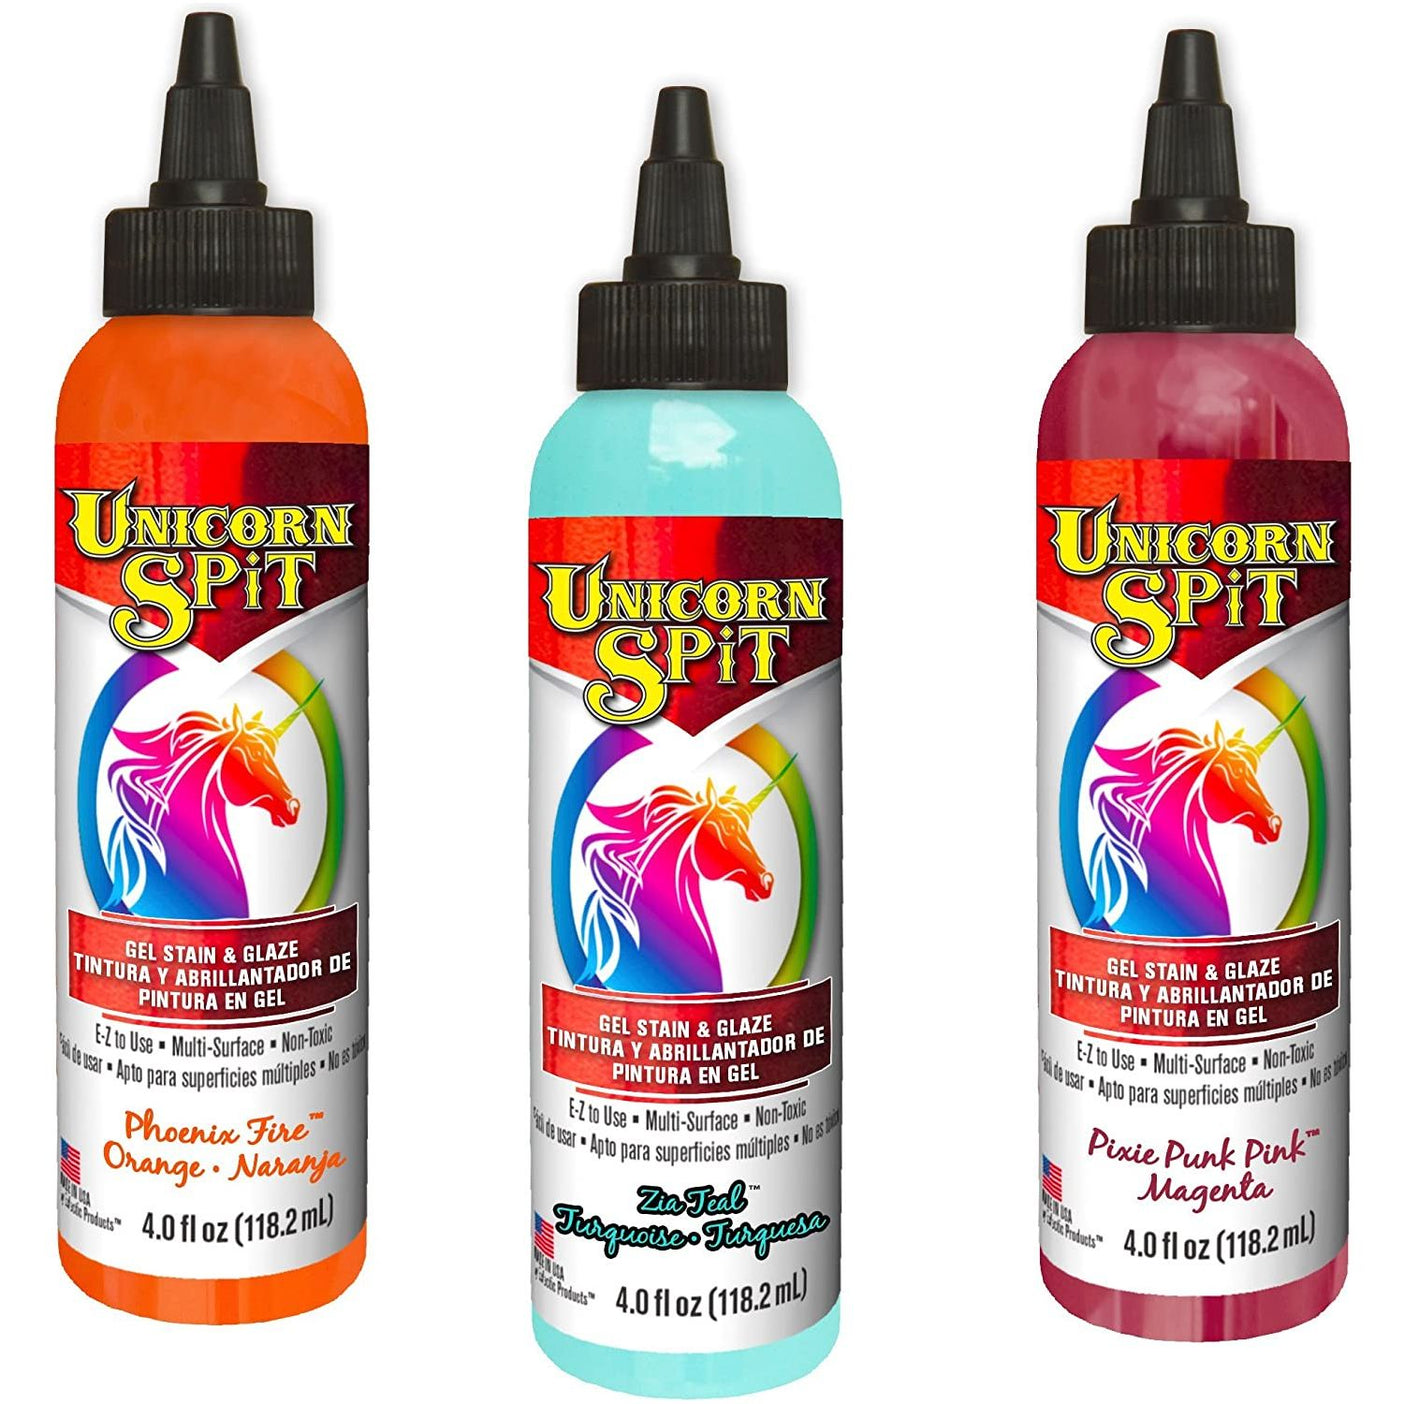 Unicorn SPiT Gel Stain & Glaze Paint in One Bundle with Famowood